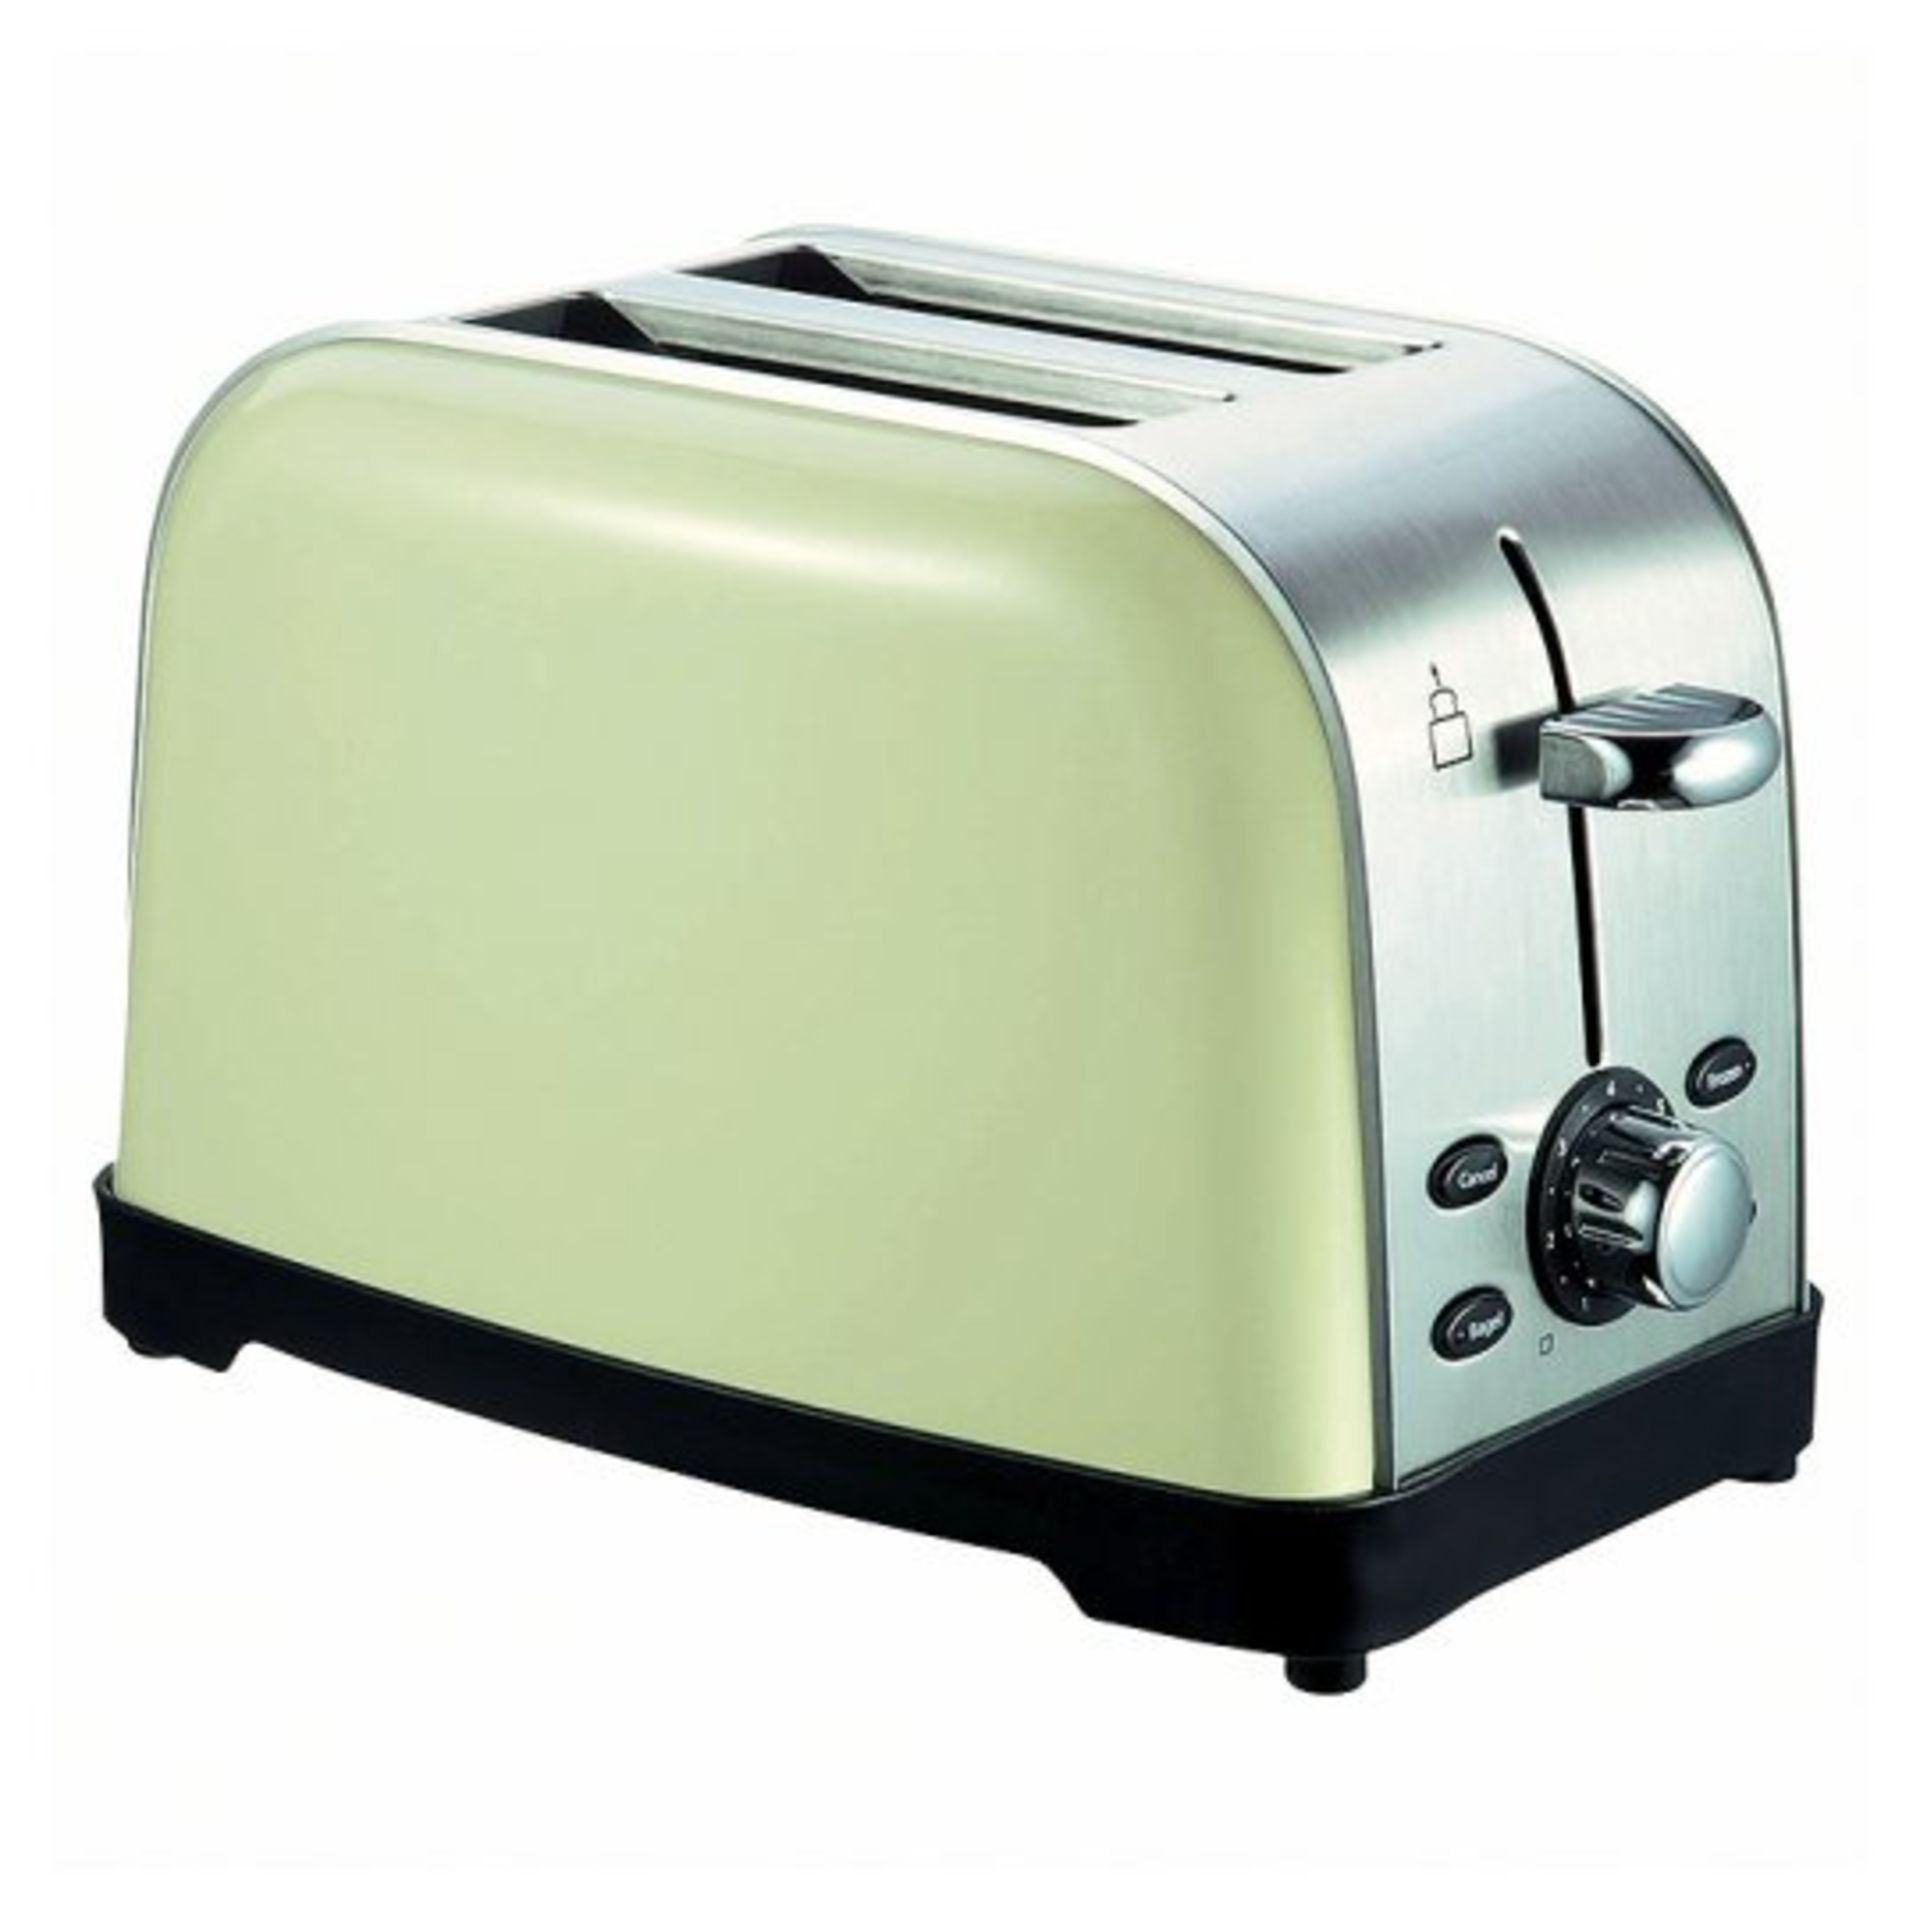 V Brand New Retro Style Chrome & Cream Two Slice Toaster RRP £29.99 X  2  Bid price to be multiplied